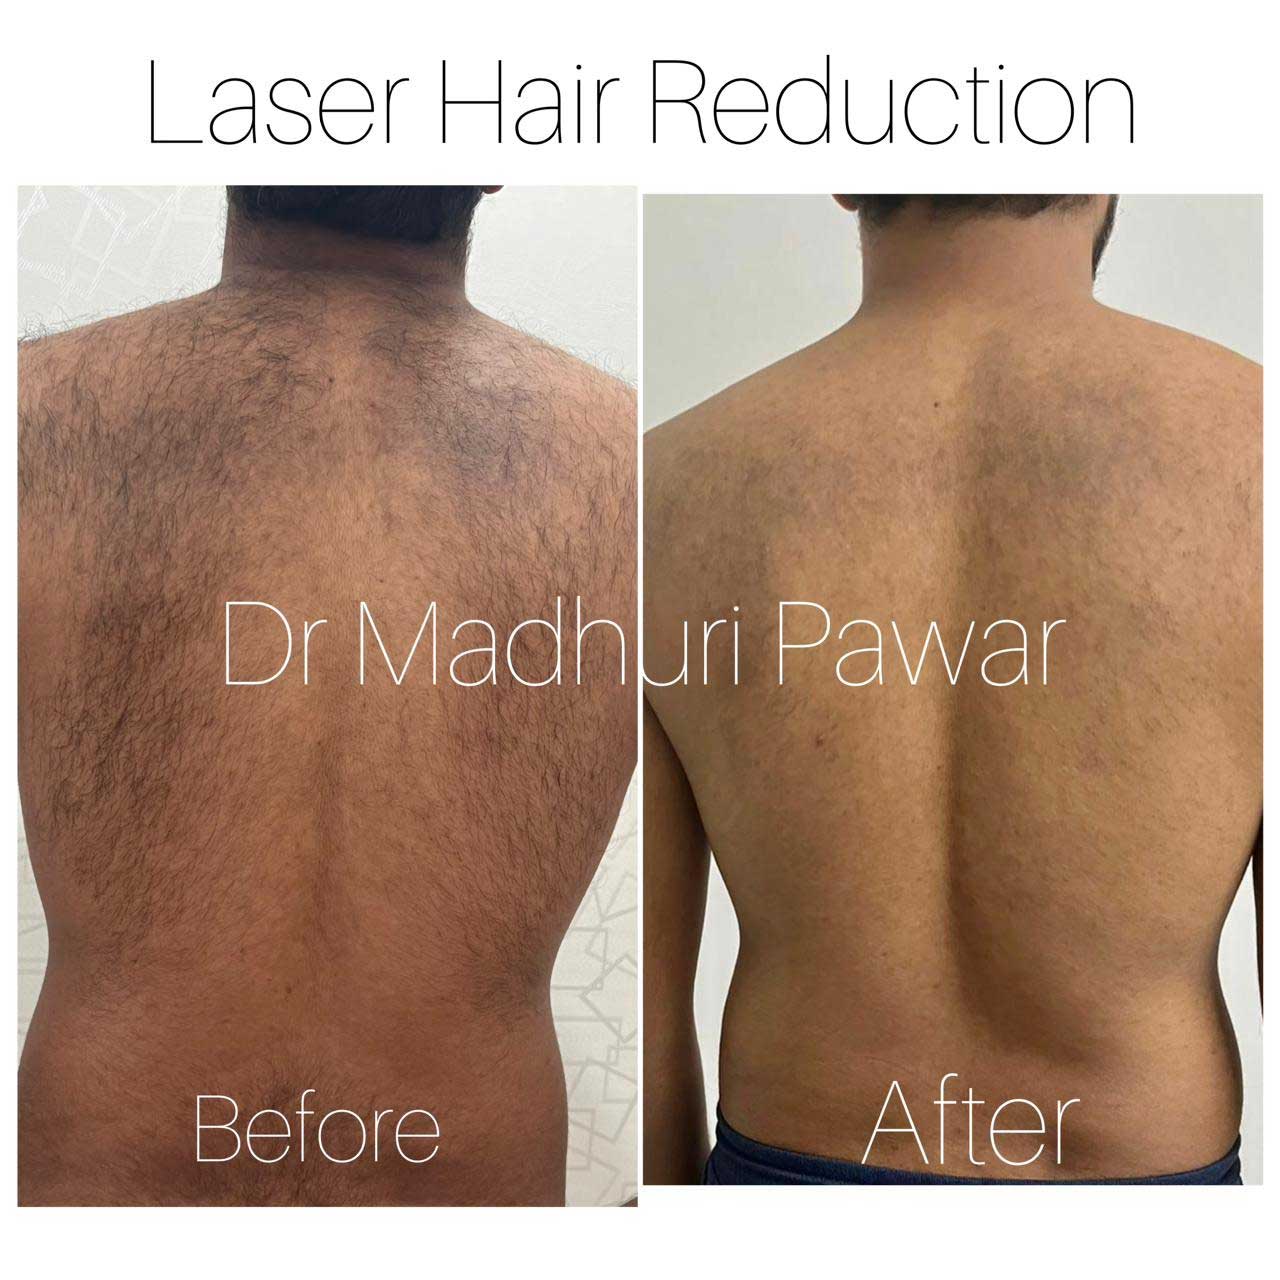 laser-hair-reduction